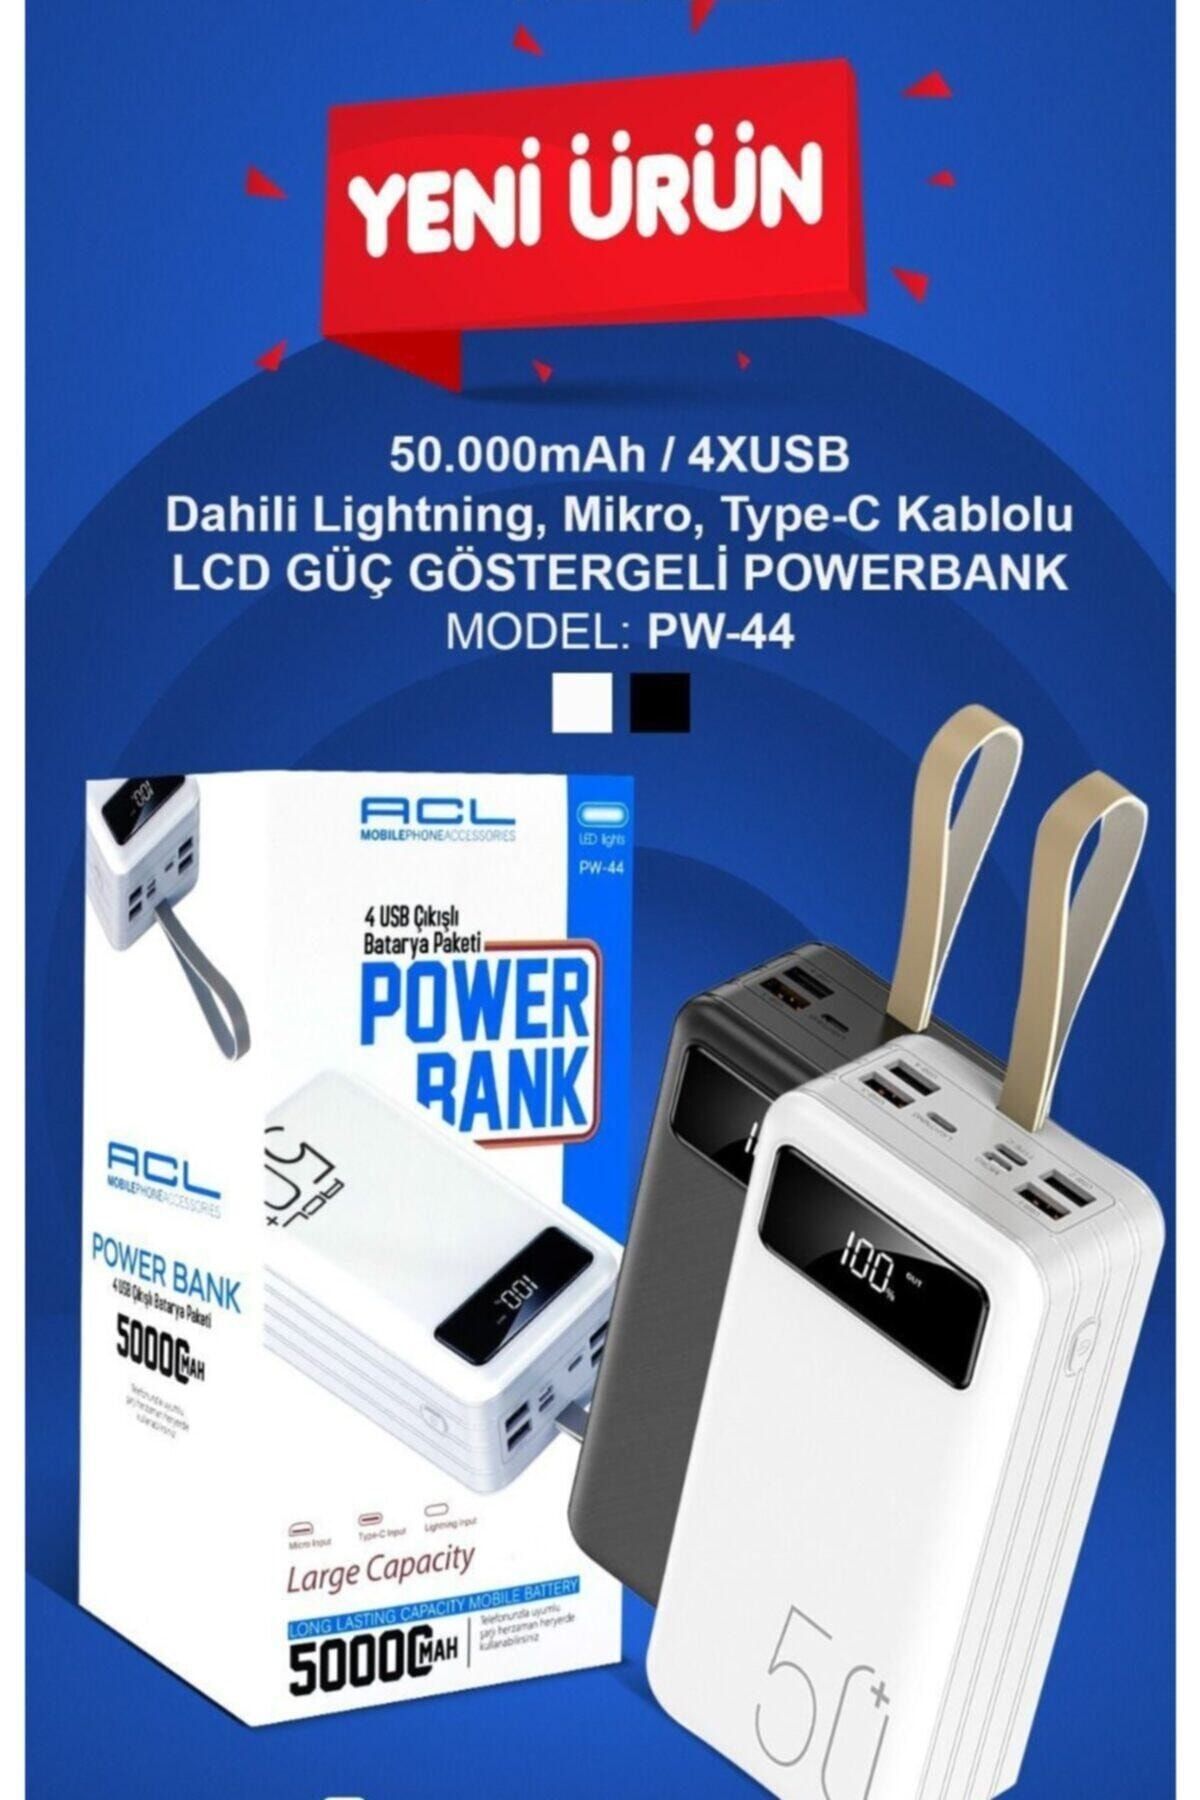 ACL MOBILE PHONE ACCESSORIES 50000 Mah / 4xusb / Dahili Lightning / Mikro / Type-c Kablolu Lcd Güç Göstergeli Powerbank